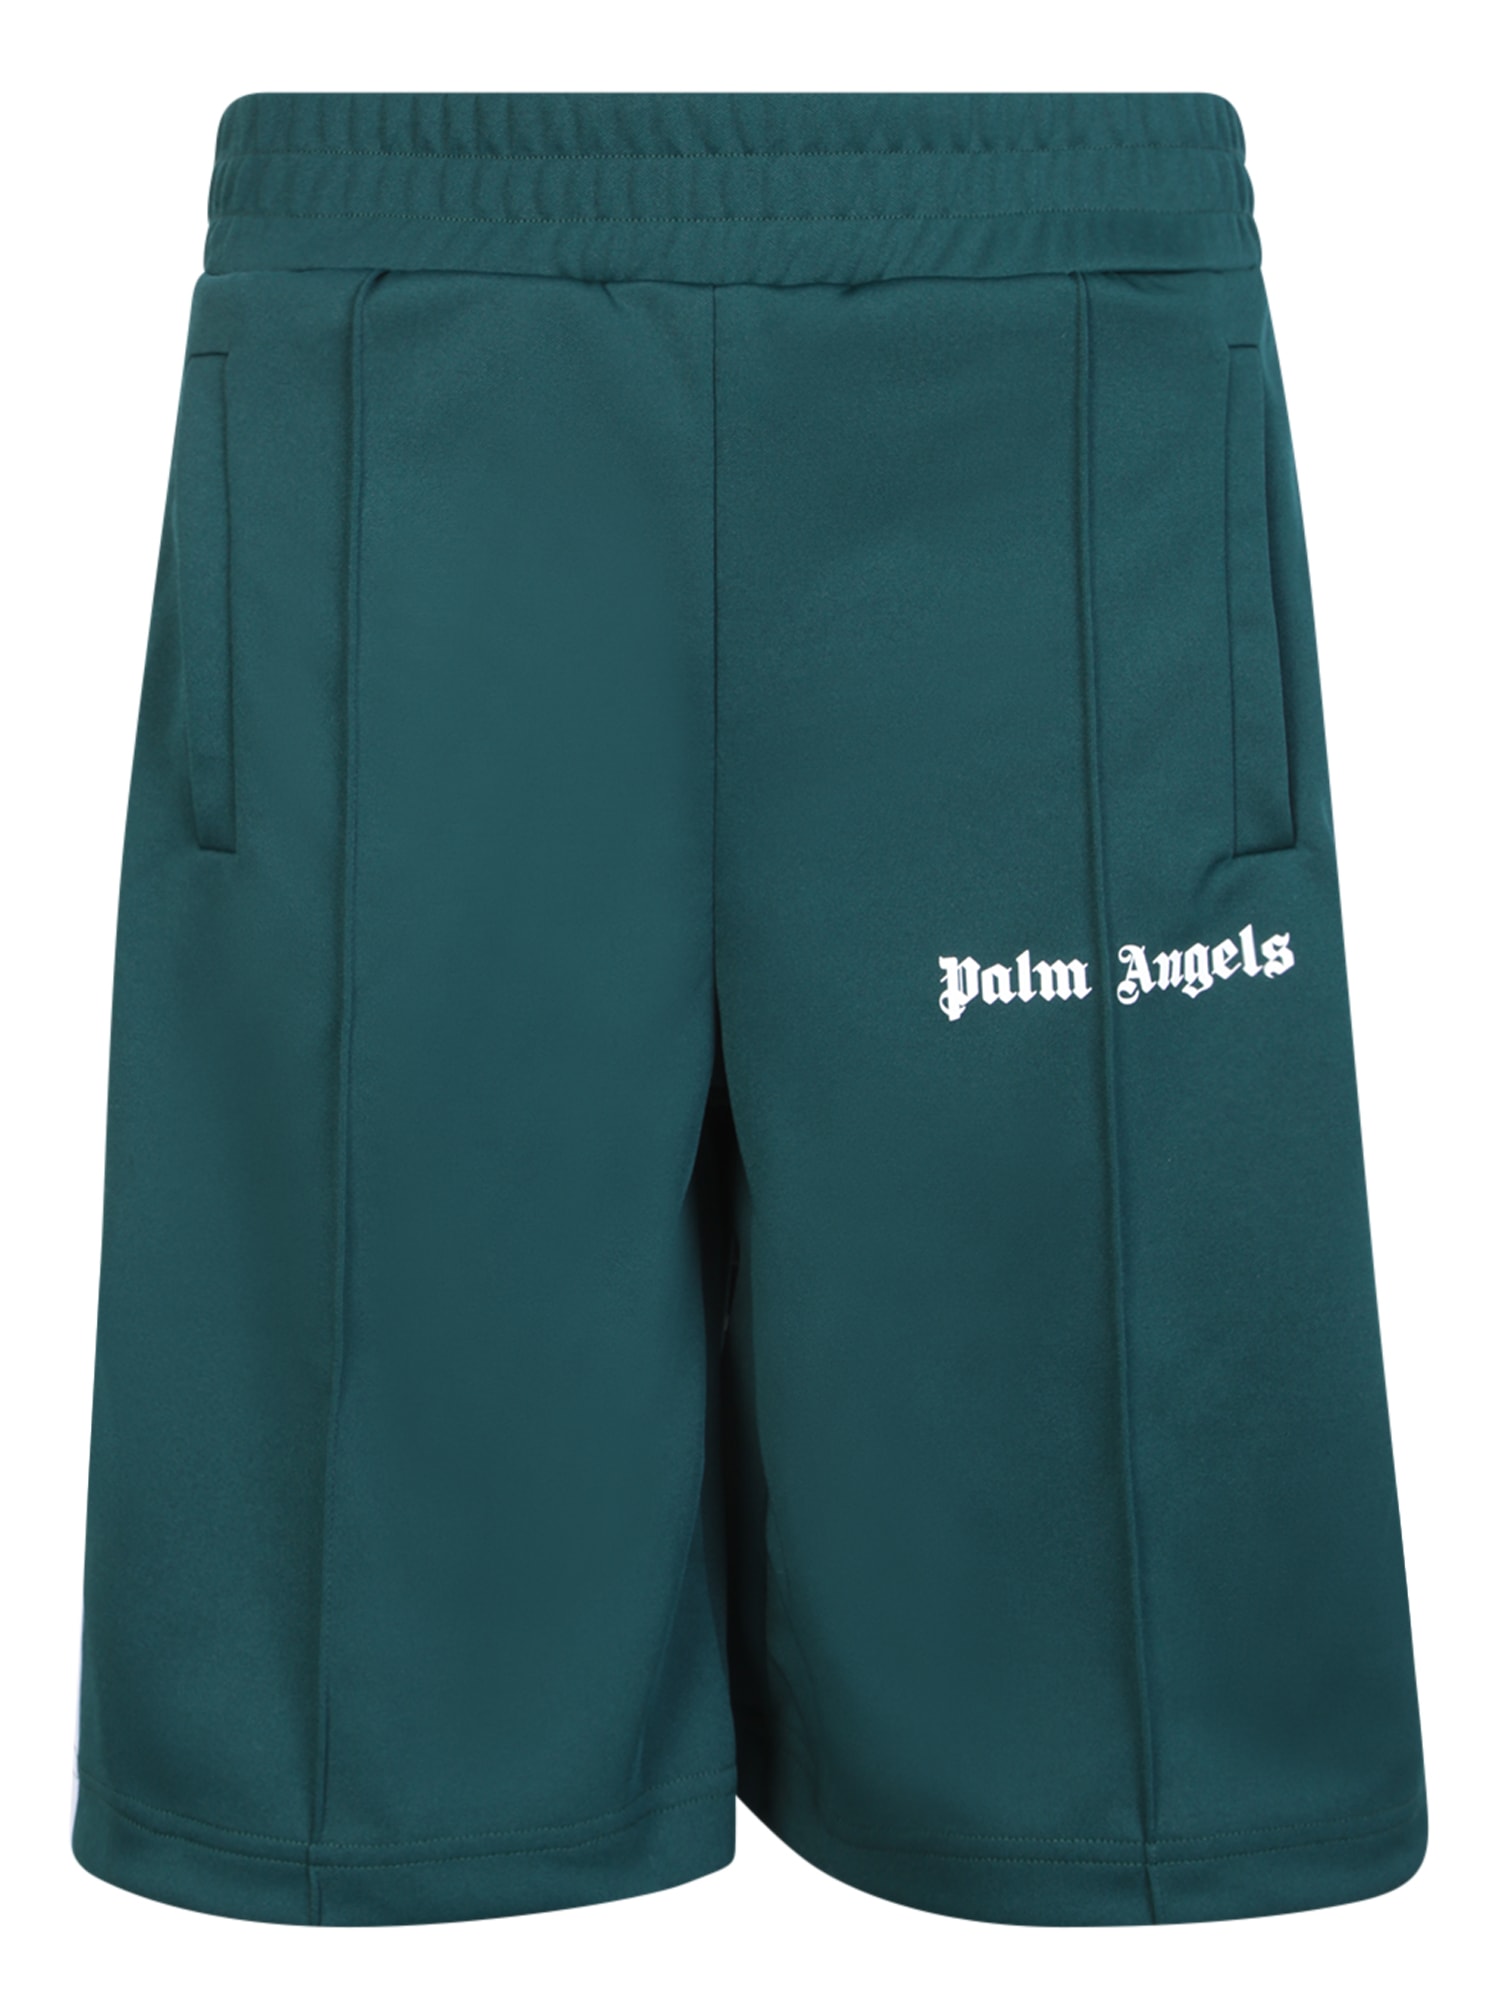 Palm Angels Green Track Shorts